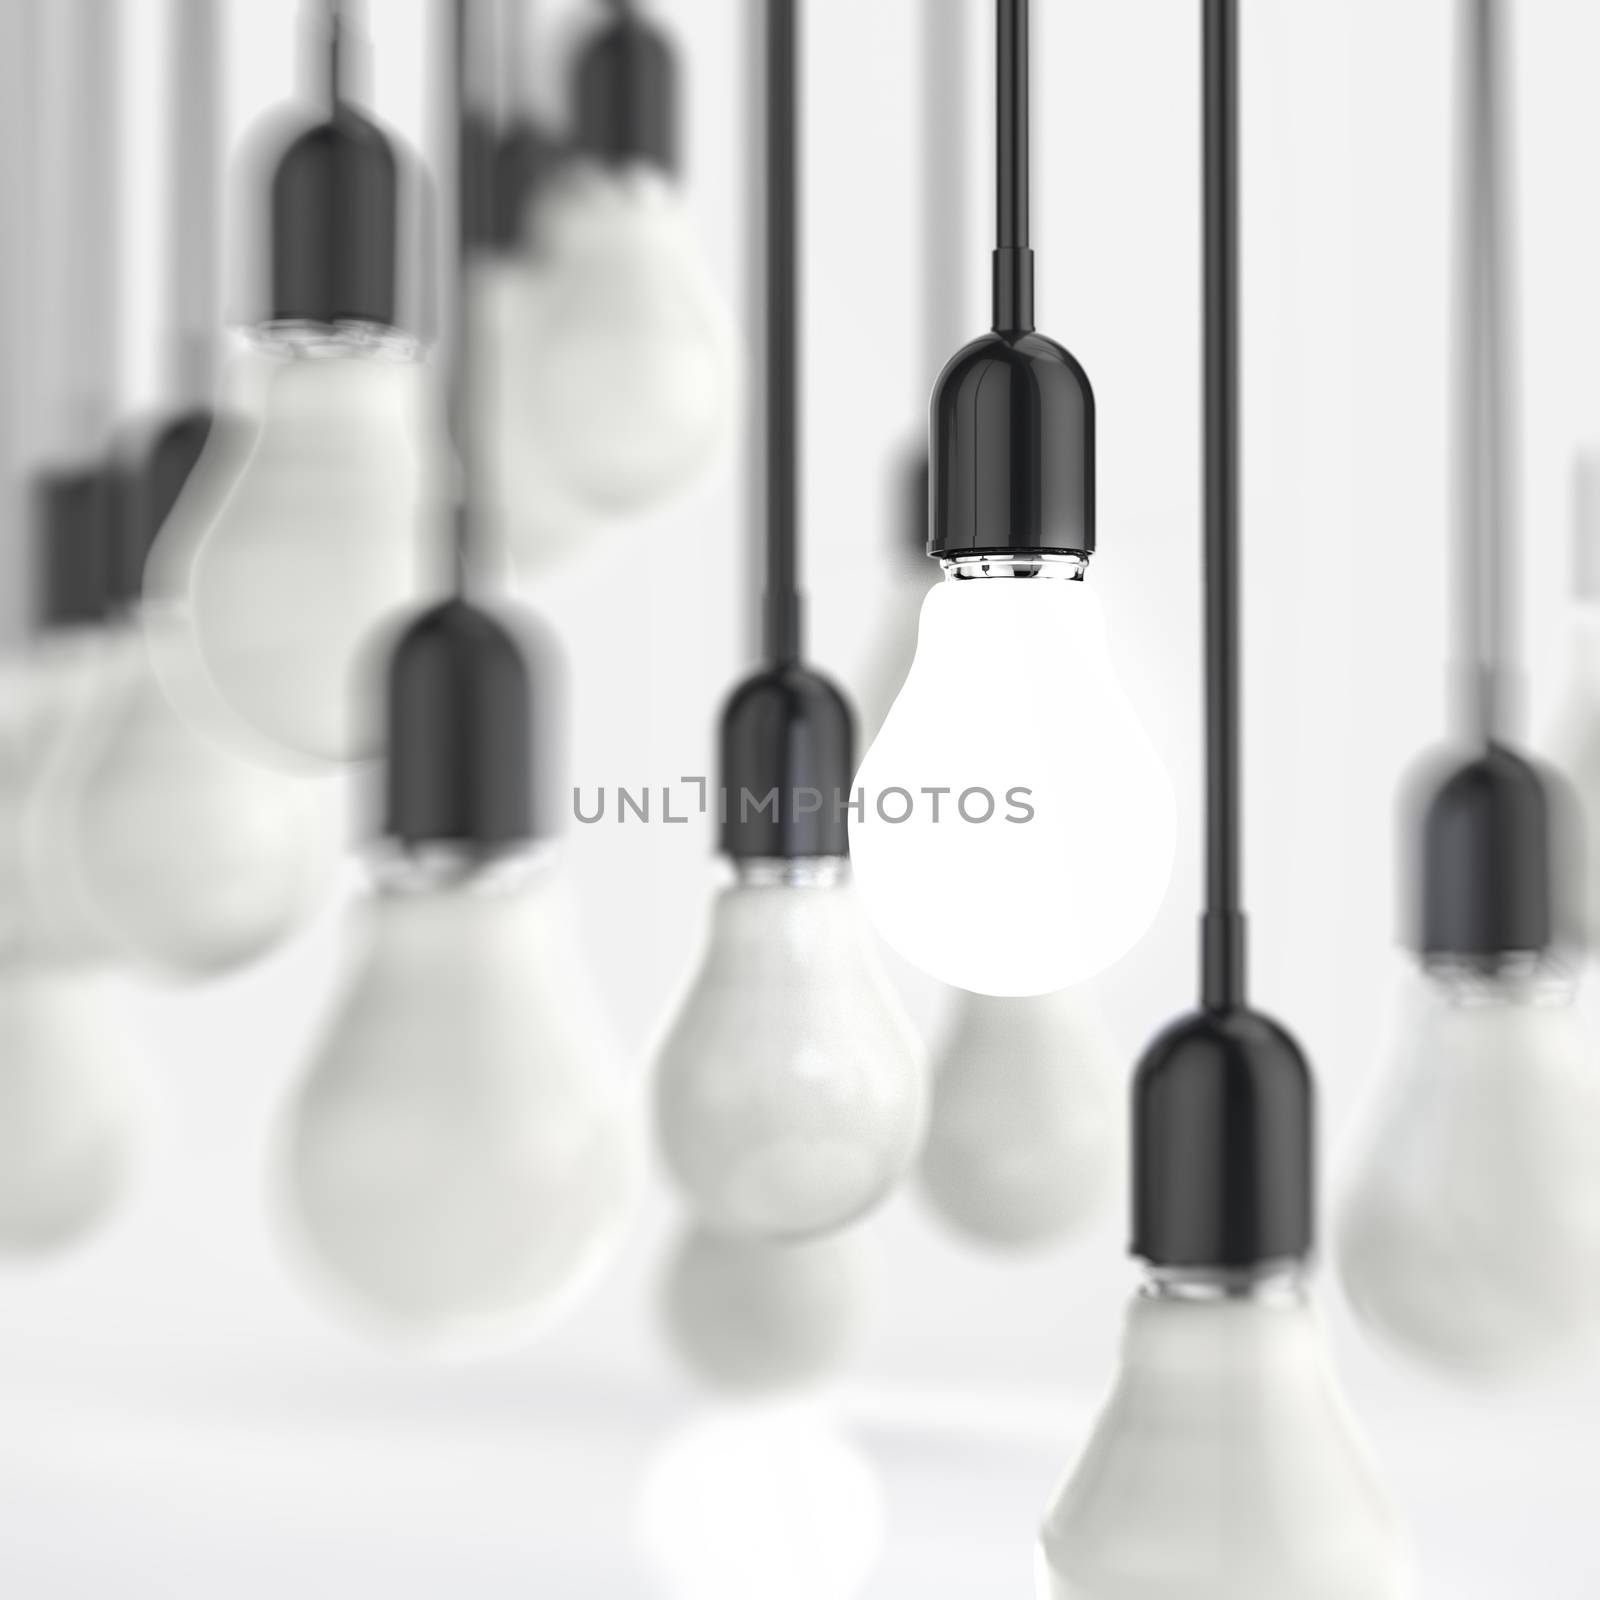 creative idea and leadership concept with 3d light bulb 